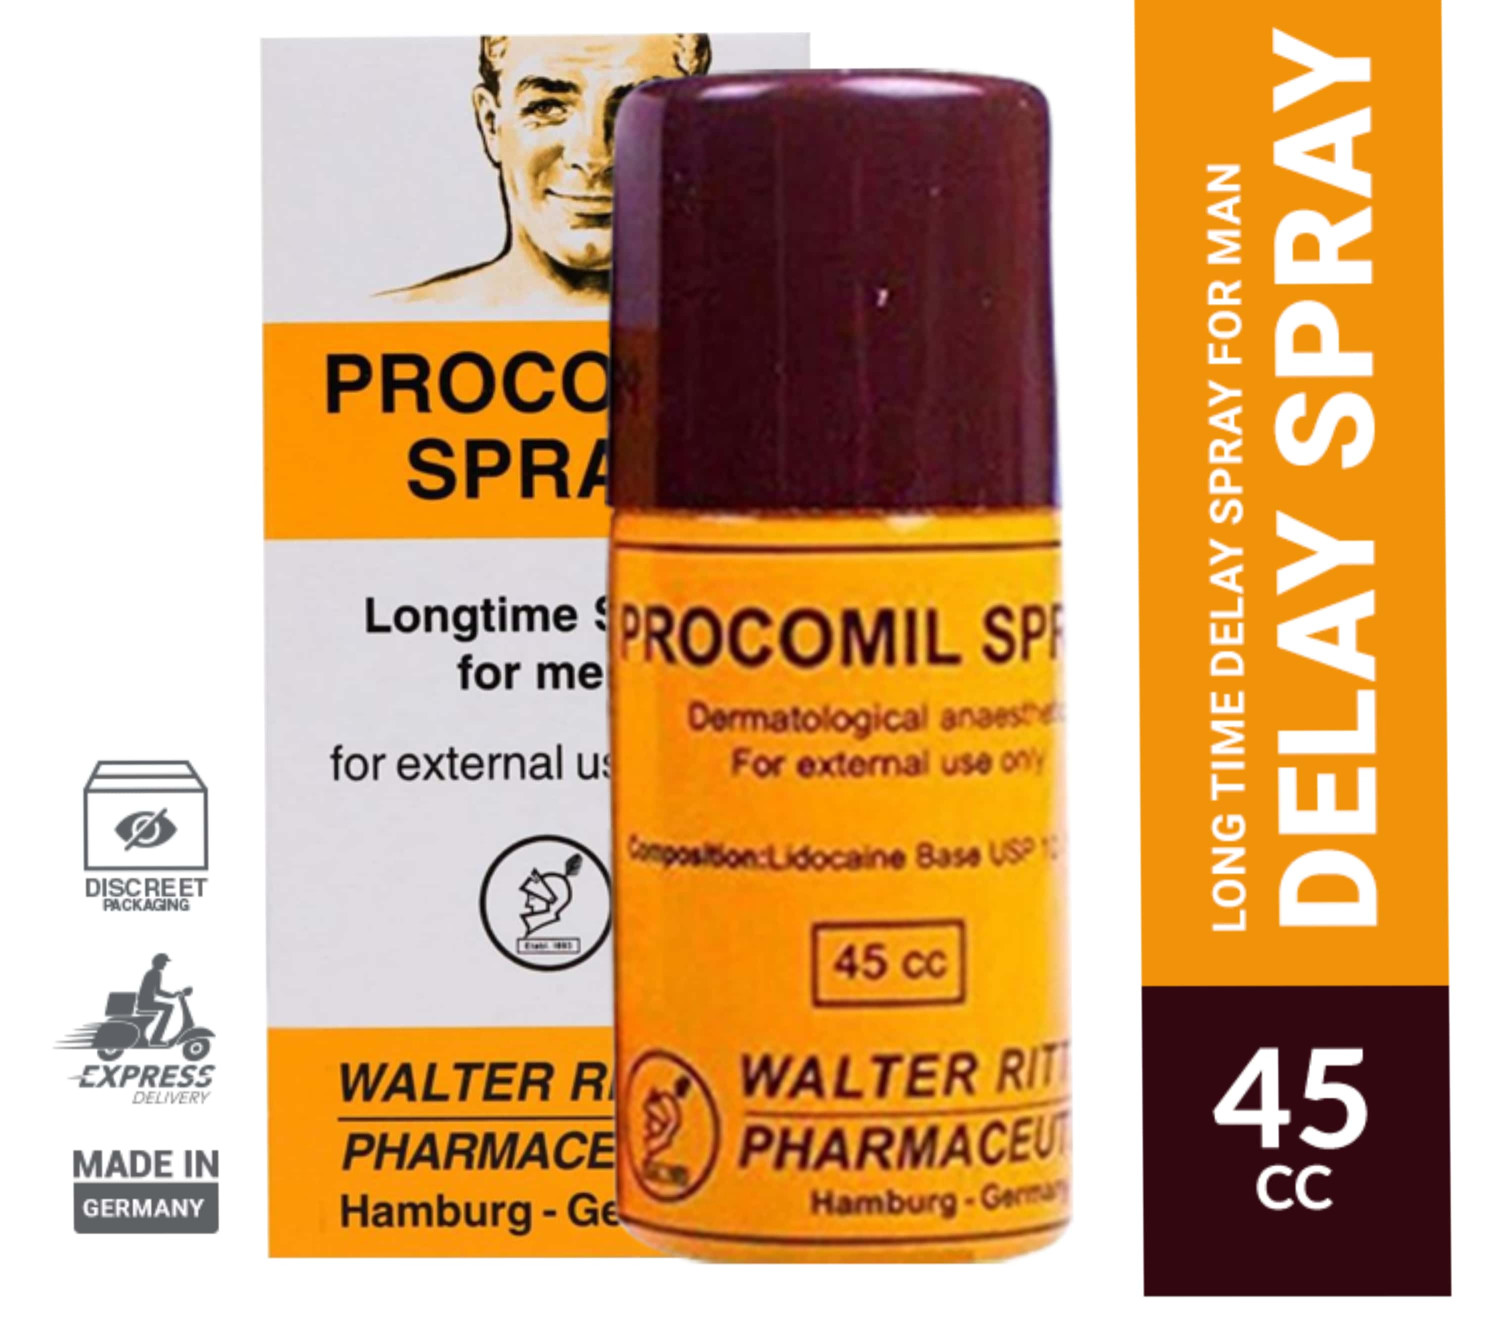 Procomil Long Time Anti Premature Ejaculation Delay Spray for Men - 45cc (Original Germany)